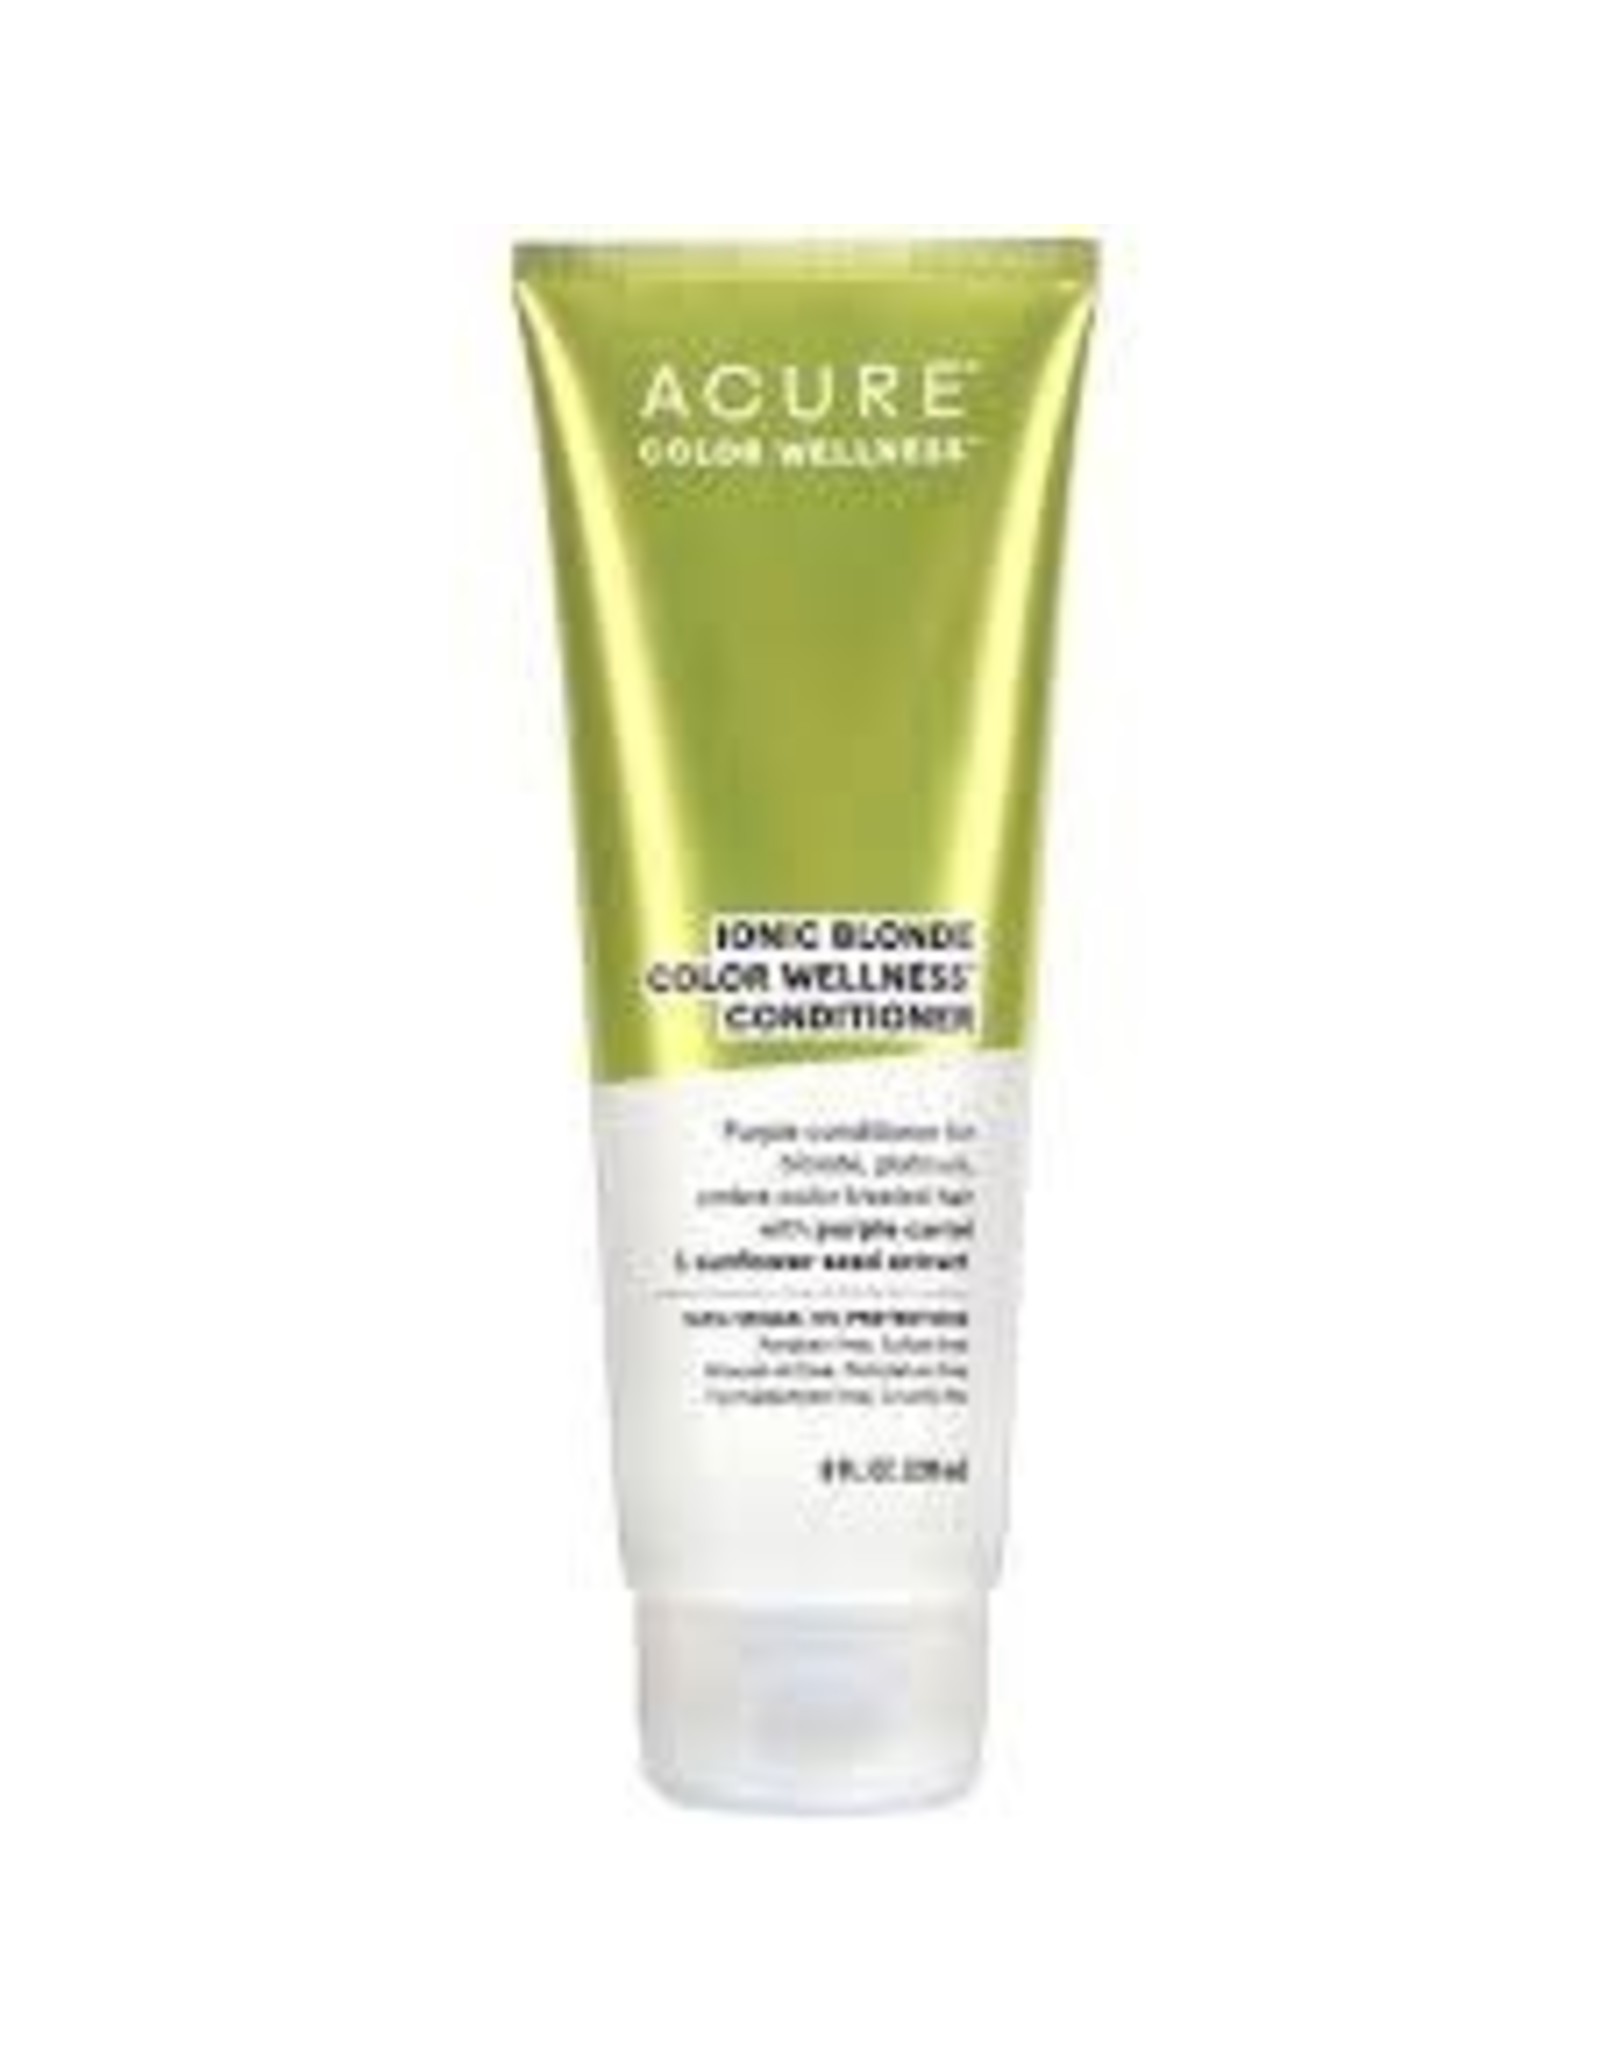 Acure Ionic Blonde Colour Wellness Shampoo 236ml